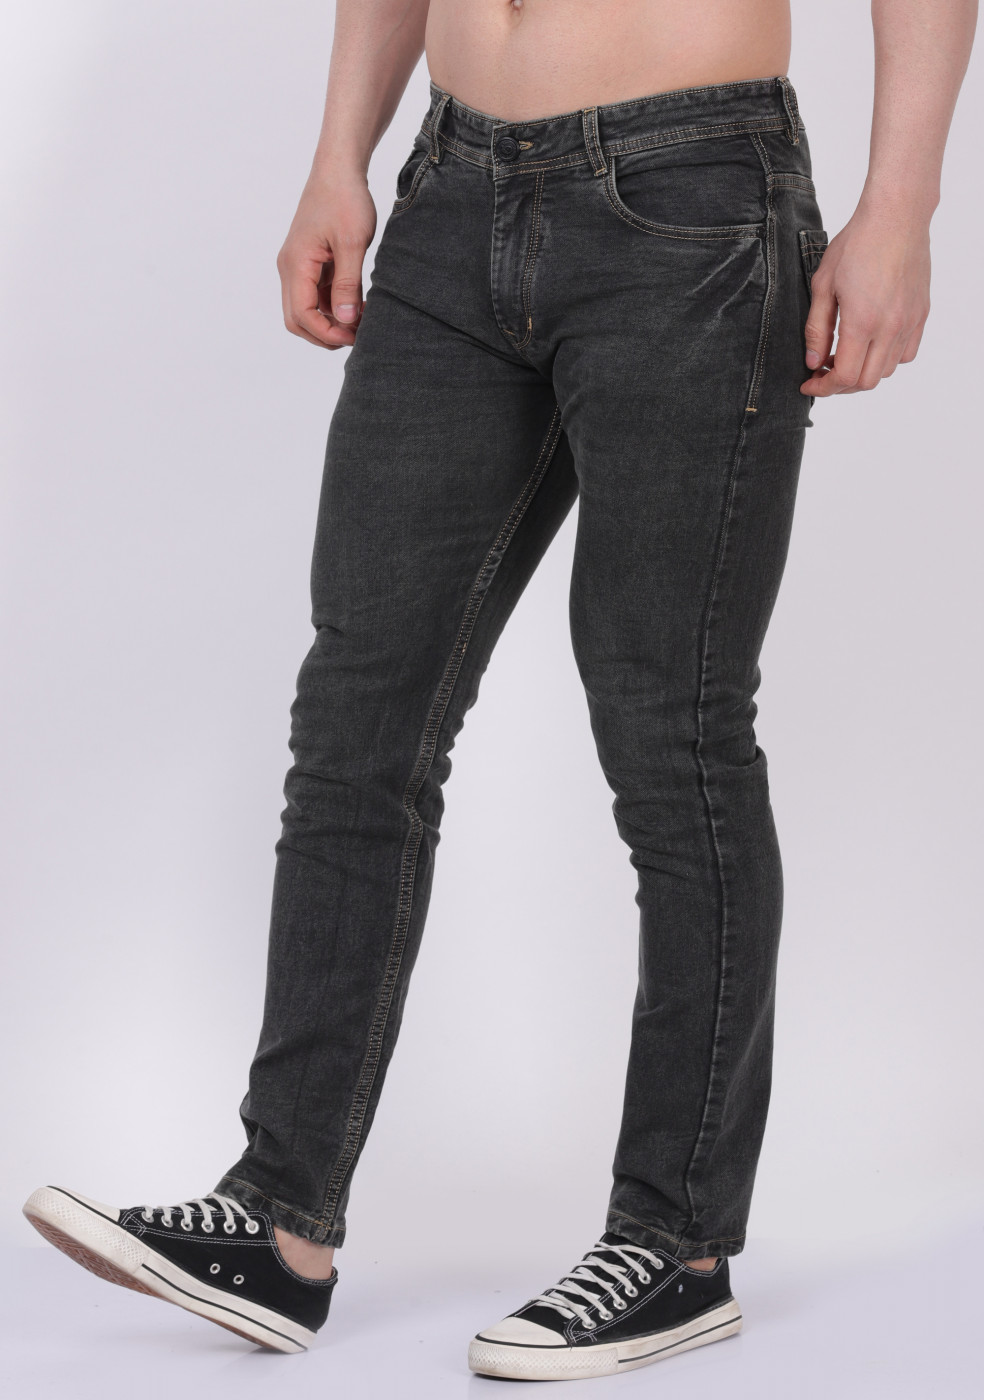 TINT Stretchable Denim Jeans For Men